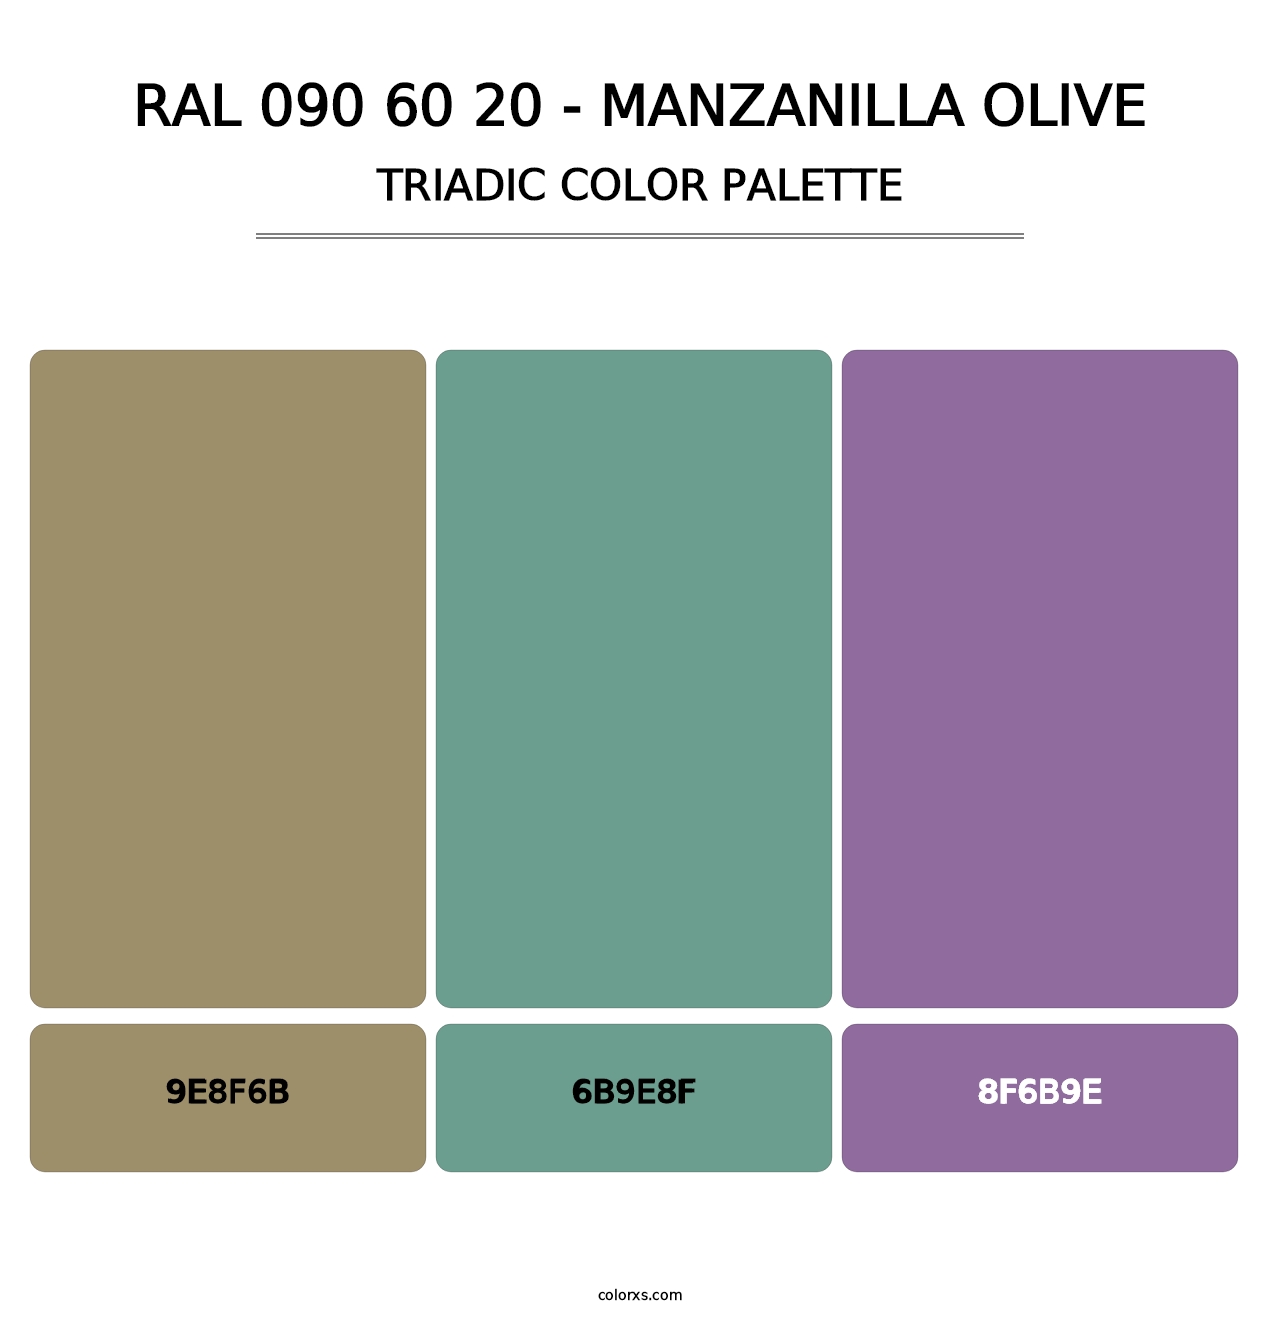 RAL 090 60 20 - Manzanilla Olive - Triadic Color Palette